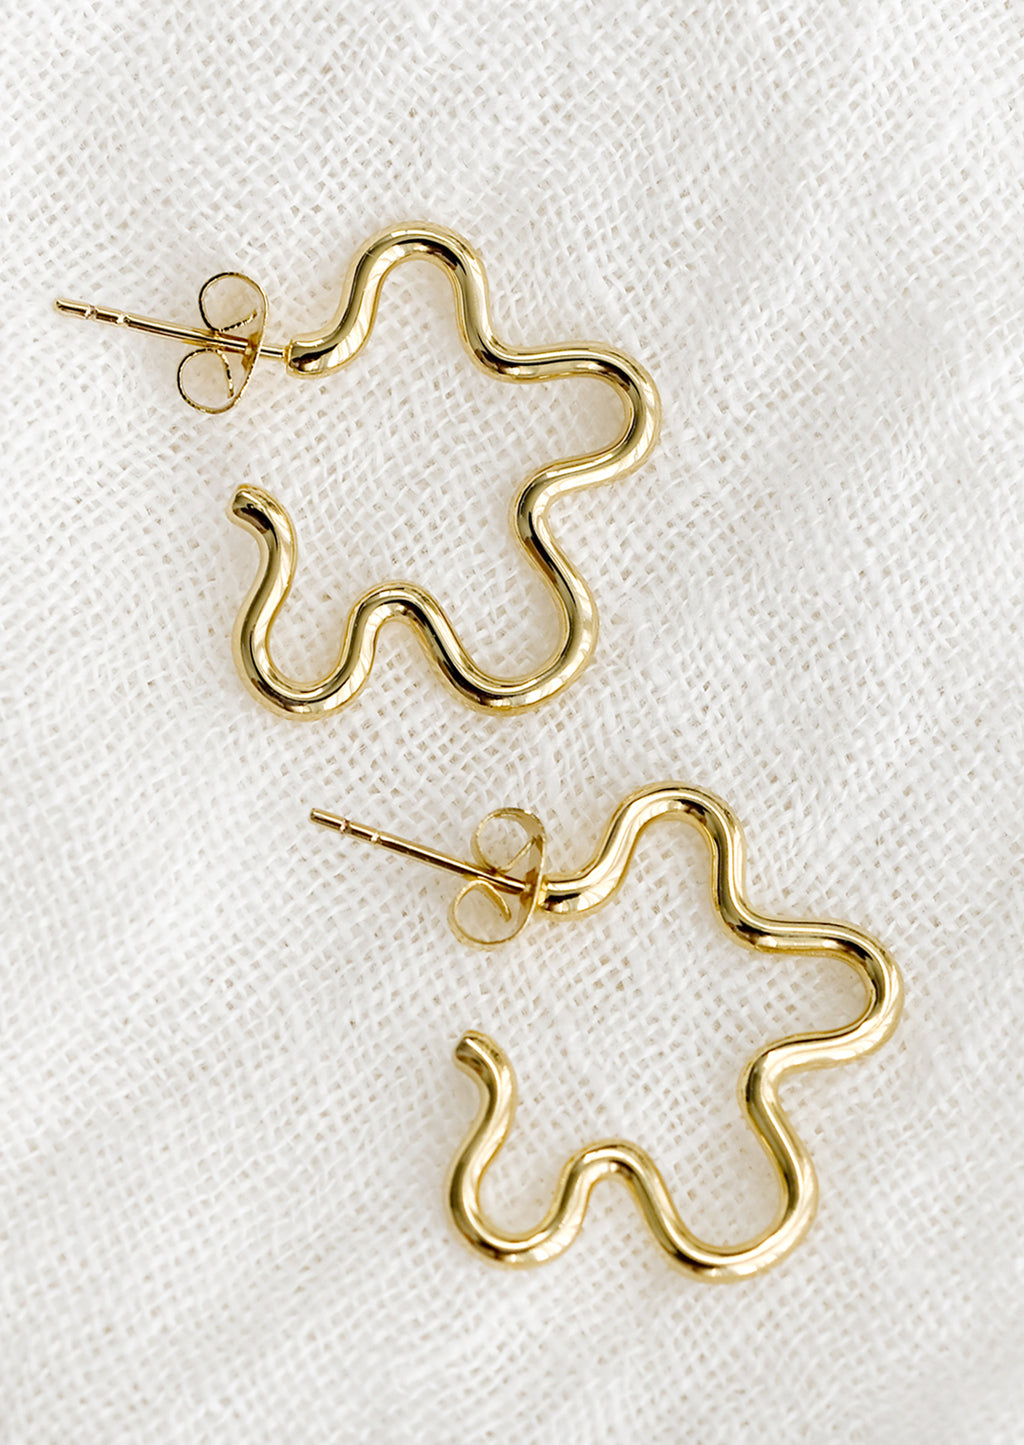 1: A pair of gold flower outline earrings.